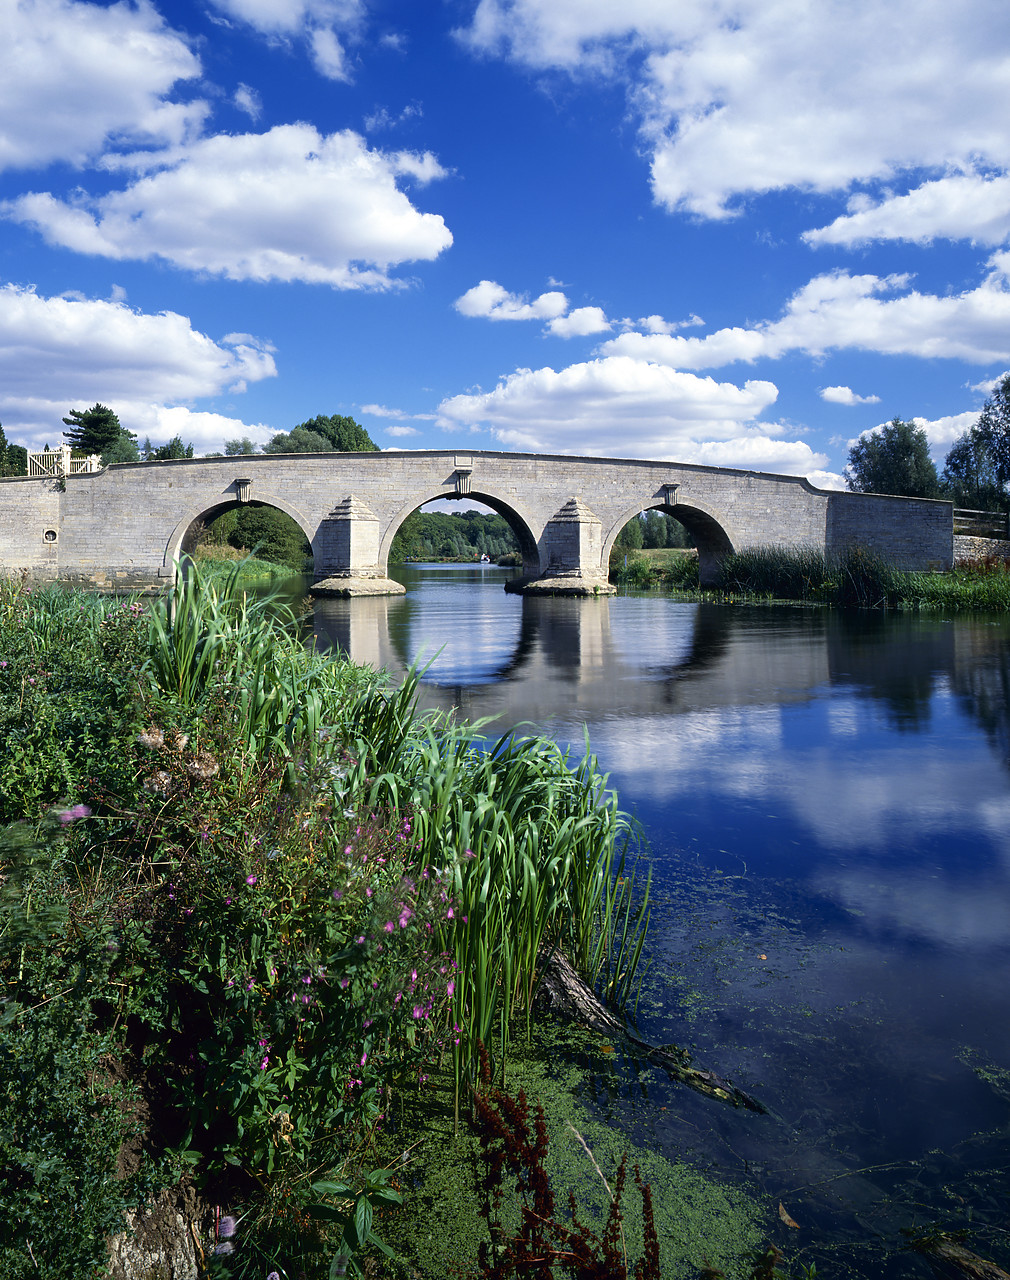 #892440-2 - Bridge over River Nene, near Peterborough, Cambridgeshire, England